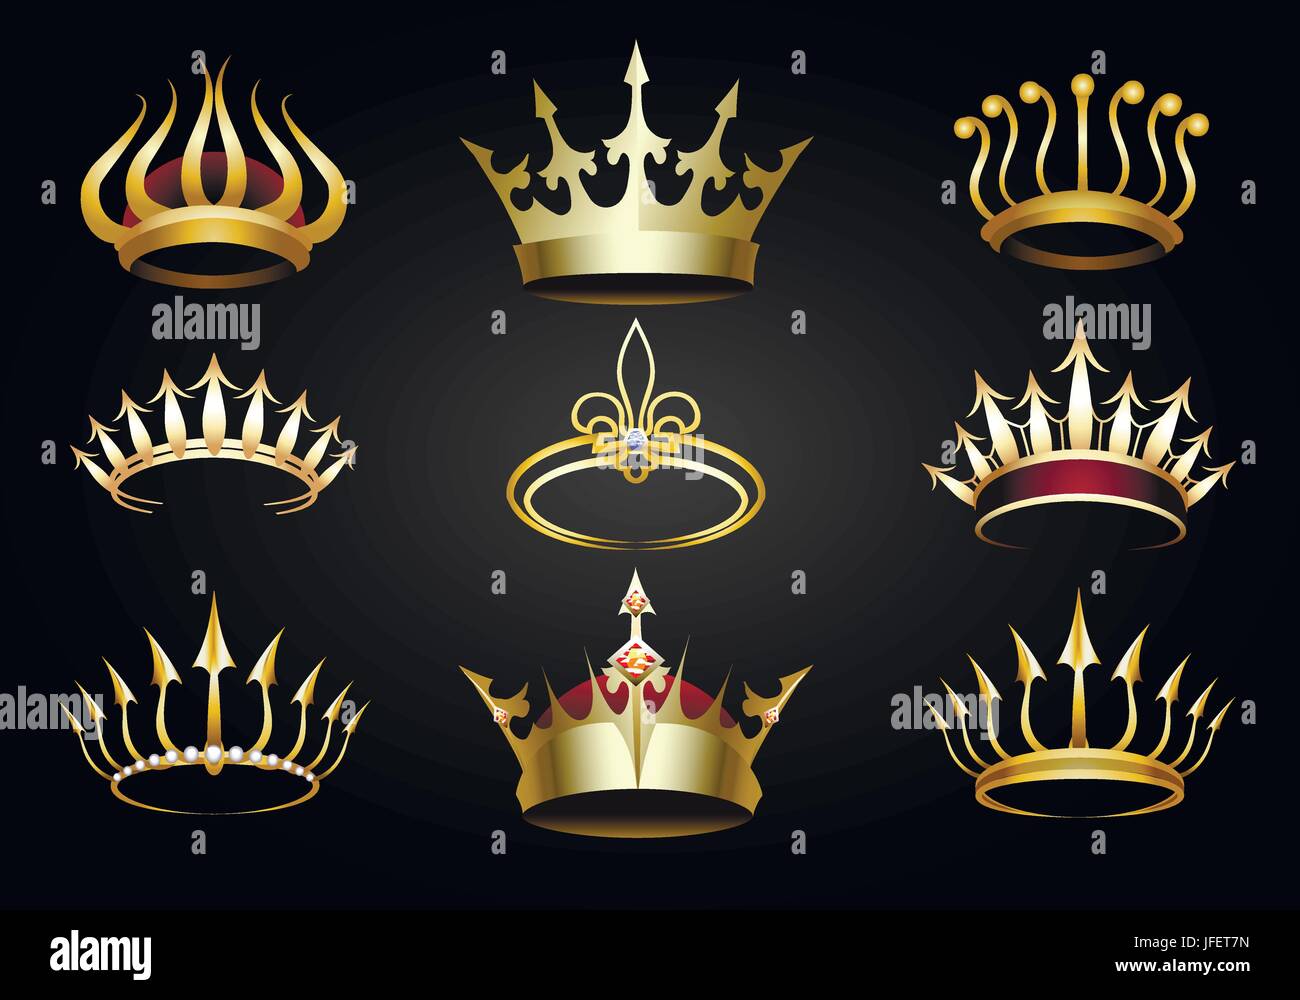 Set of various golden crowns on black background. Vector illustration. Stock Vector